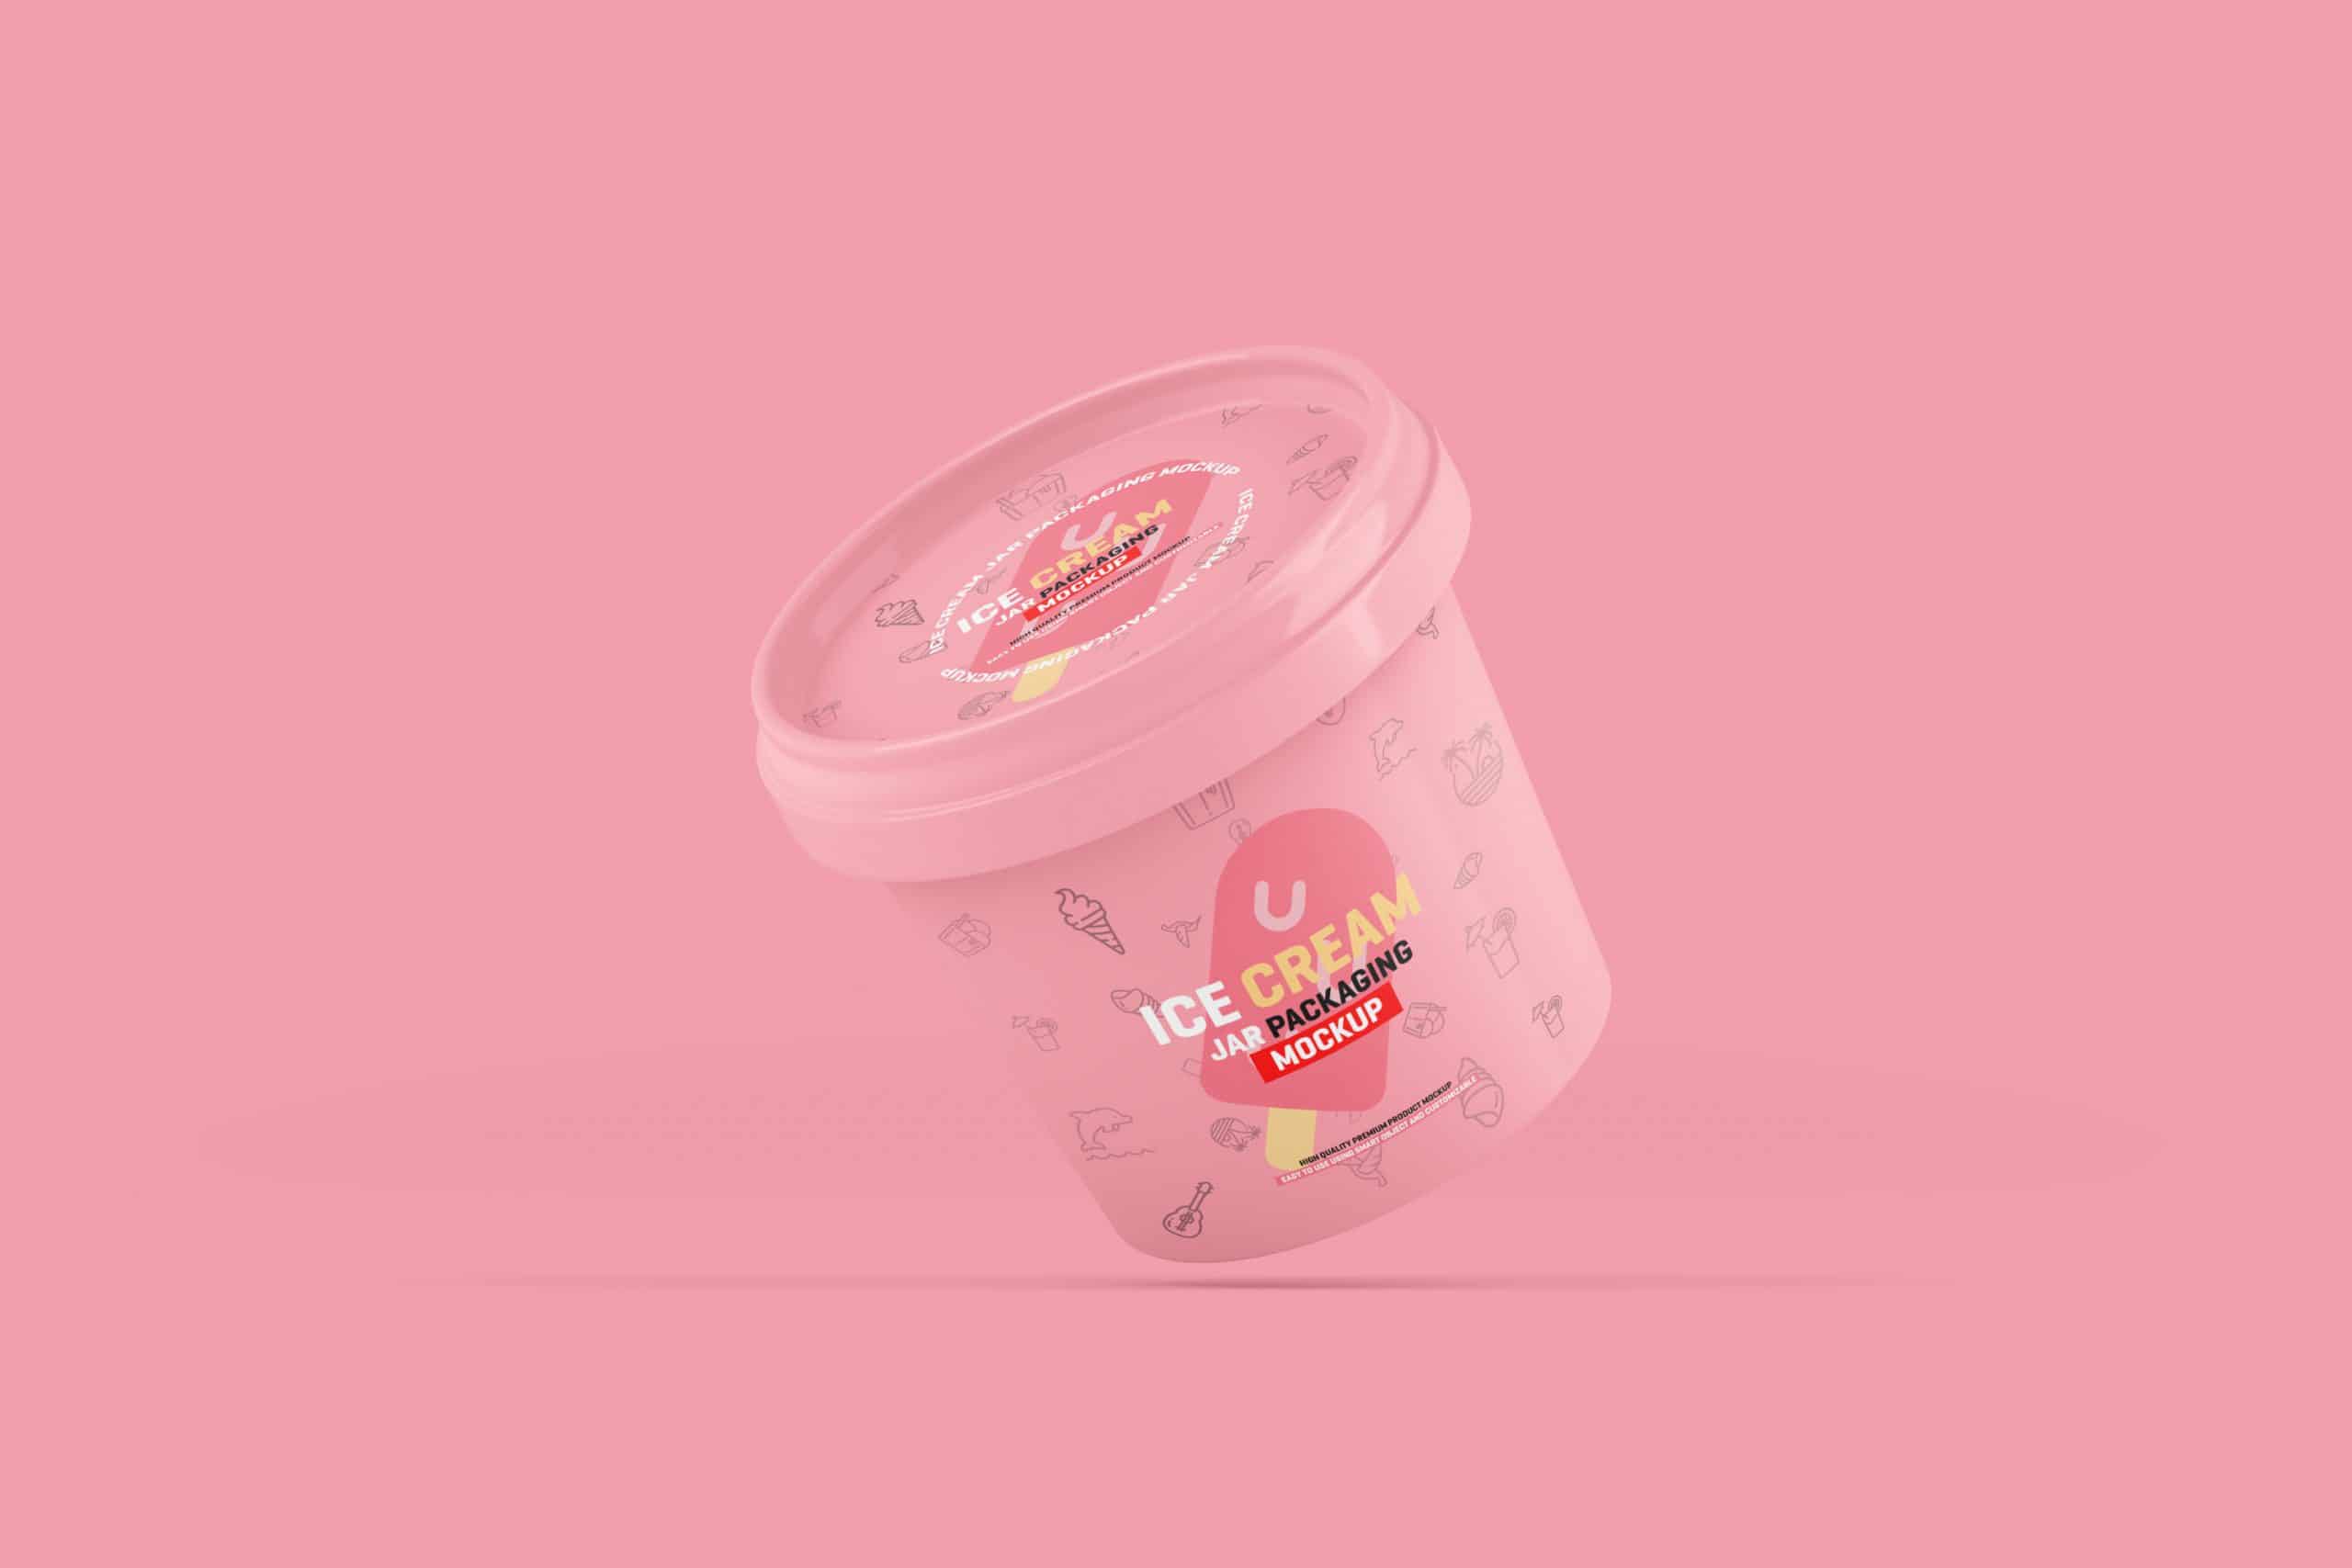 Download Ice Cream Jar Packaging Mockup - MockupNest | Free & Premium Product Mock-Ups